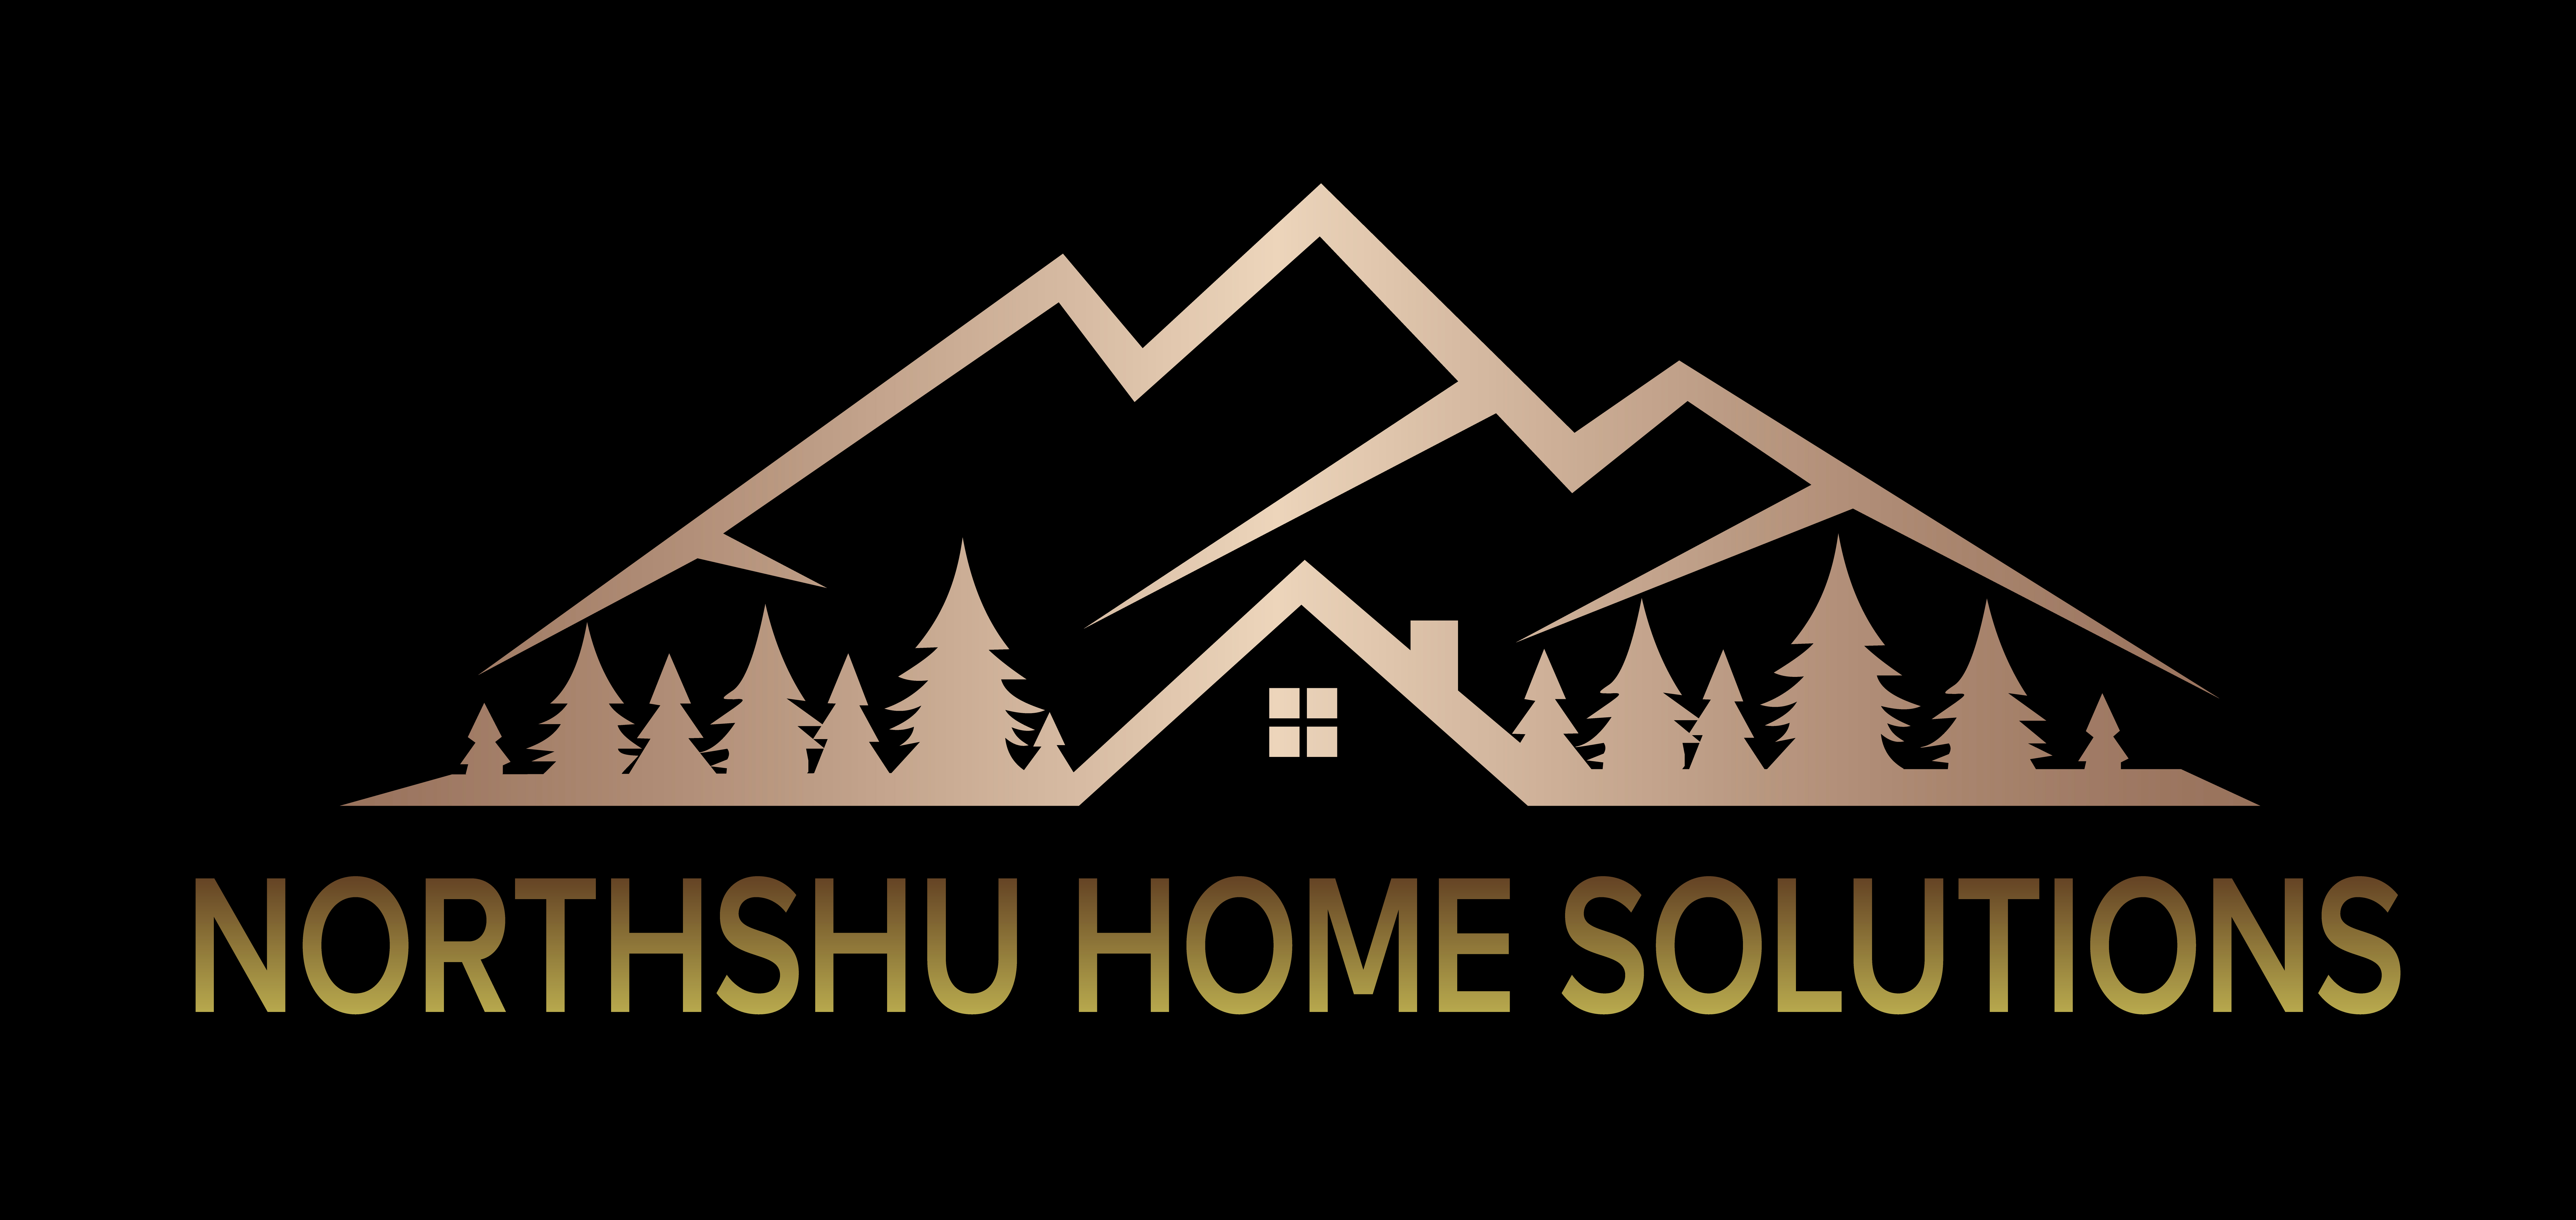 NorthShu Home Solutions